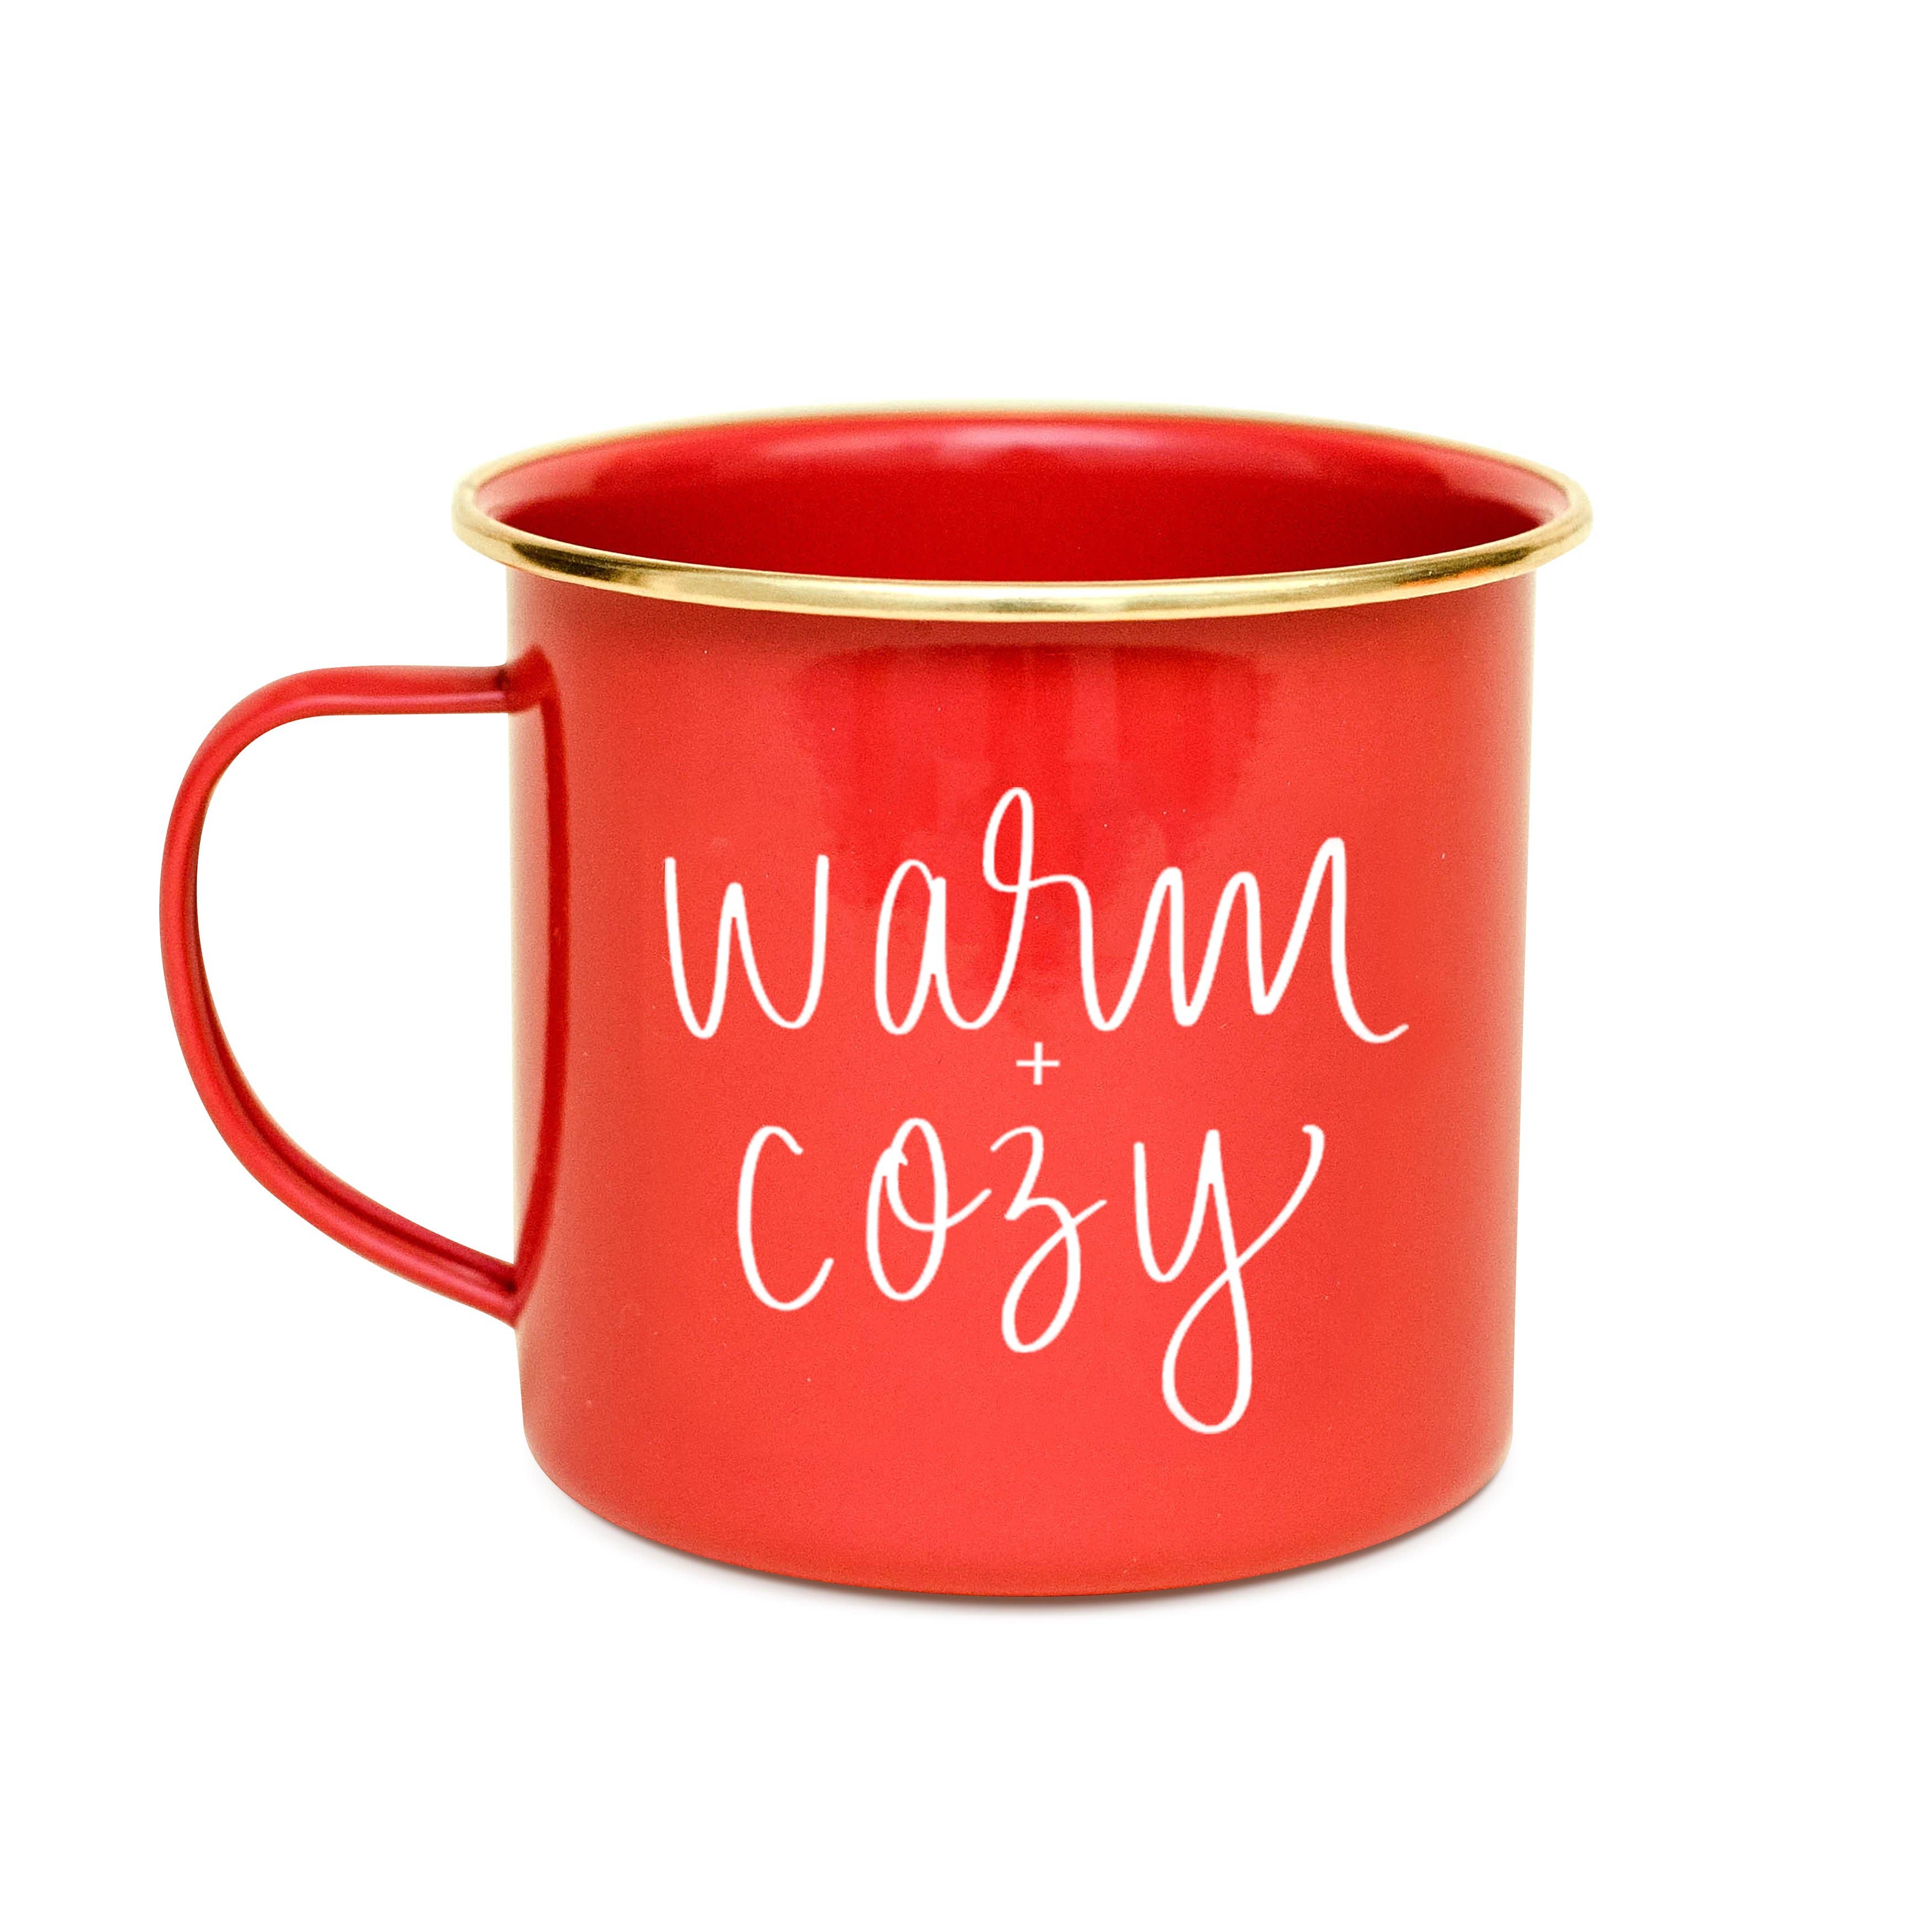 Sweet Water Decor - Warm and Cozy - Red Campfire Coffee Mug - 18 oz